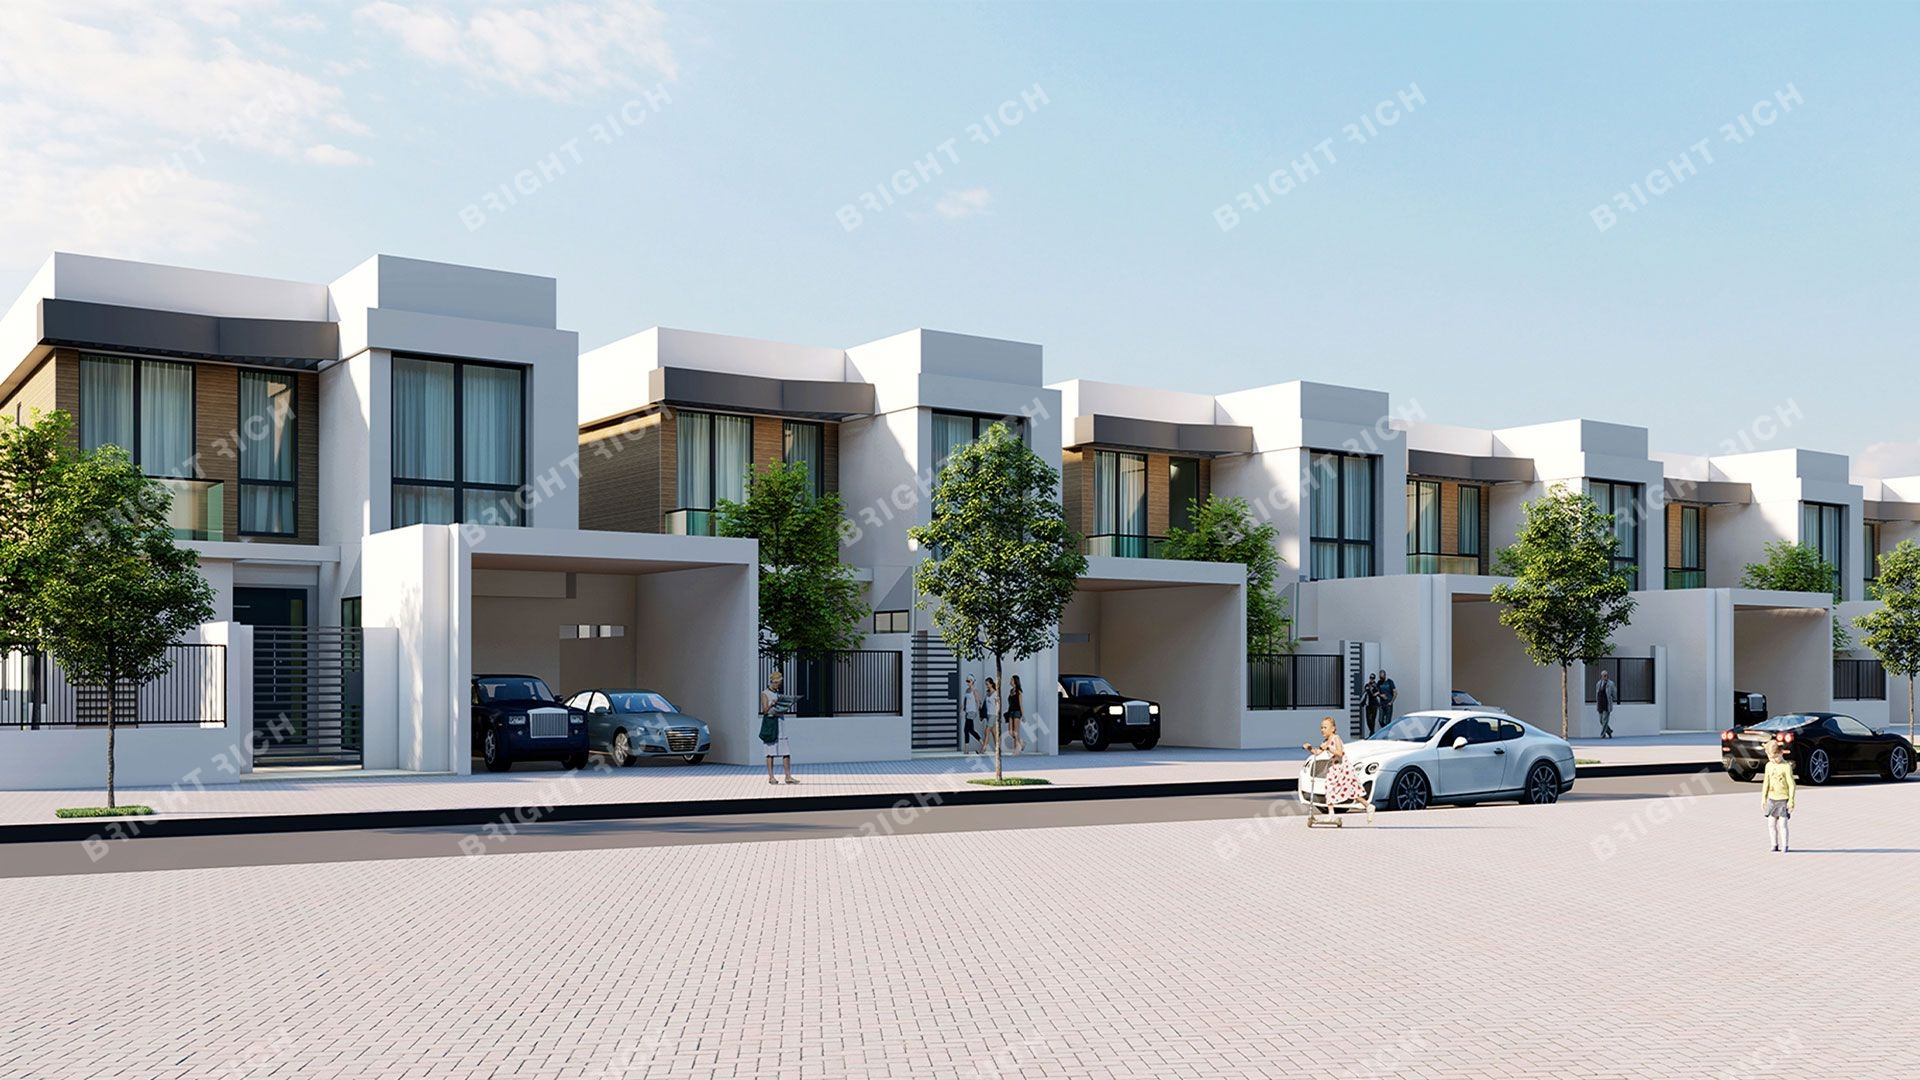 Marbella Villas 2, apart complex in Ras Al Khaimah